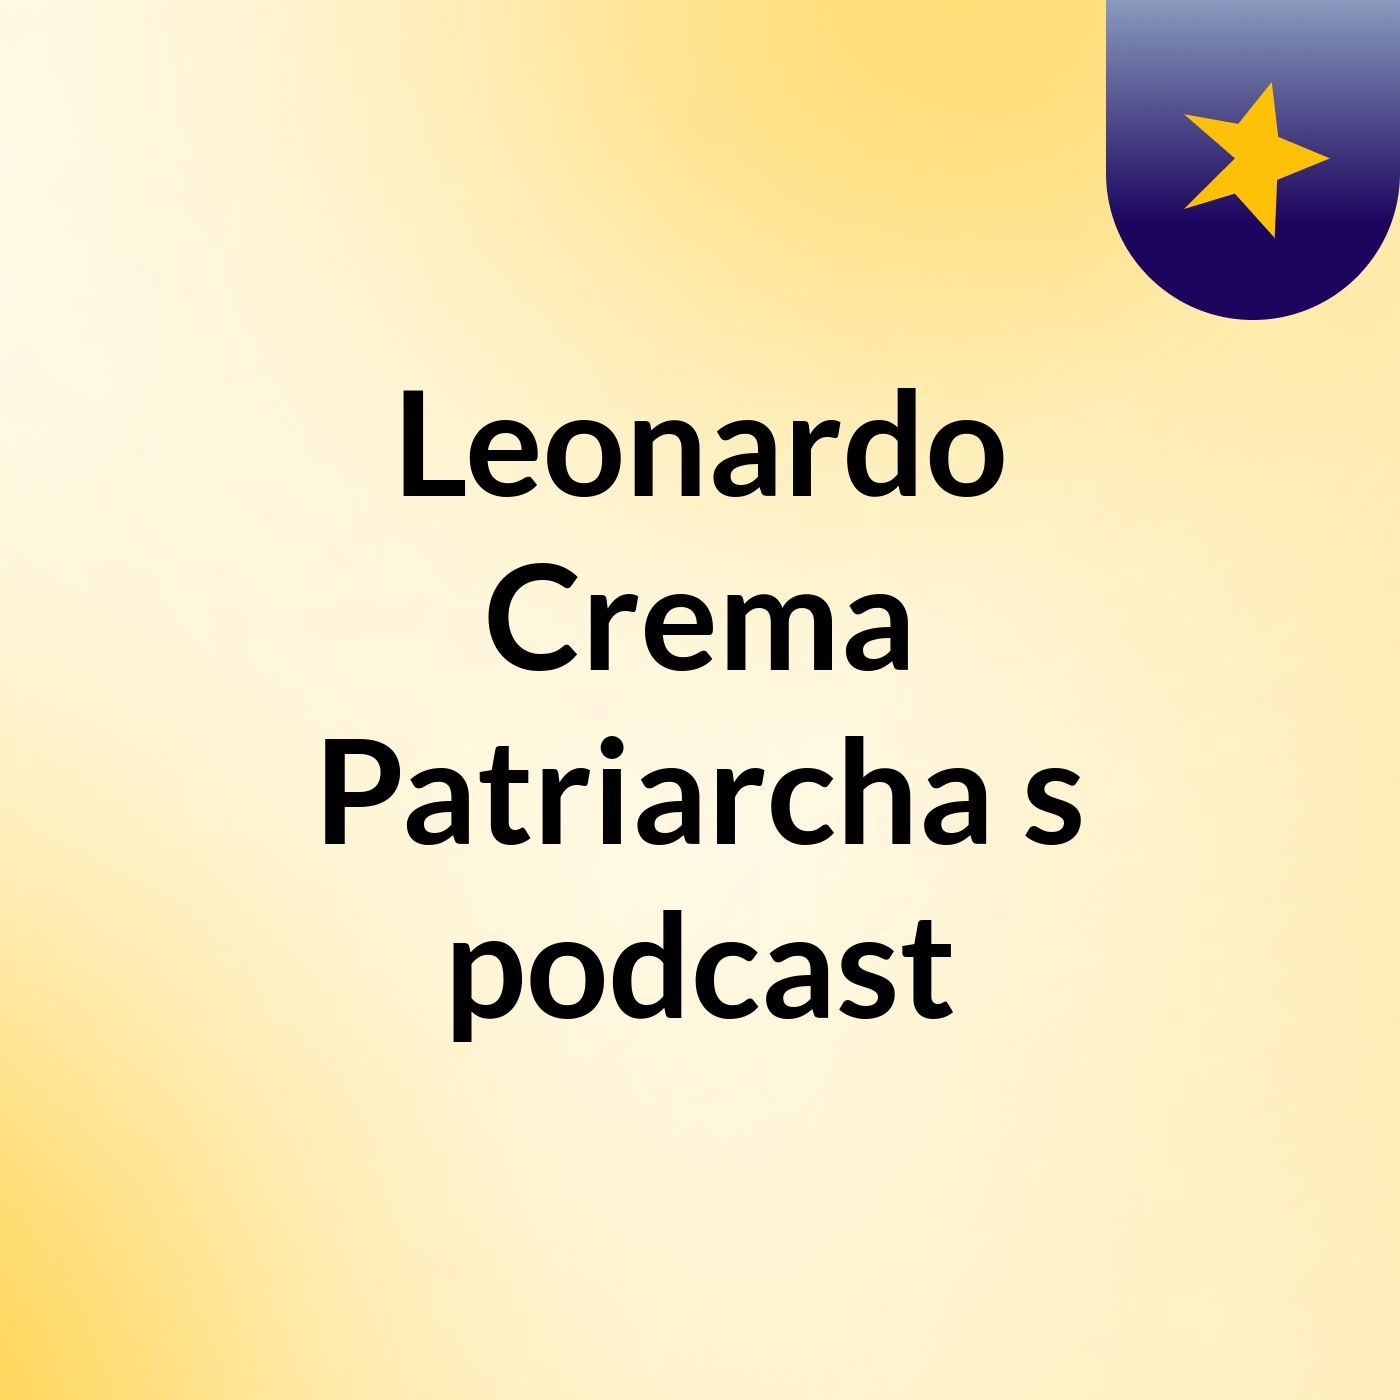 Leonardo Crema Patriarcha's podcast